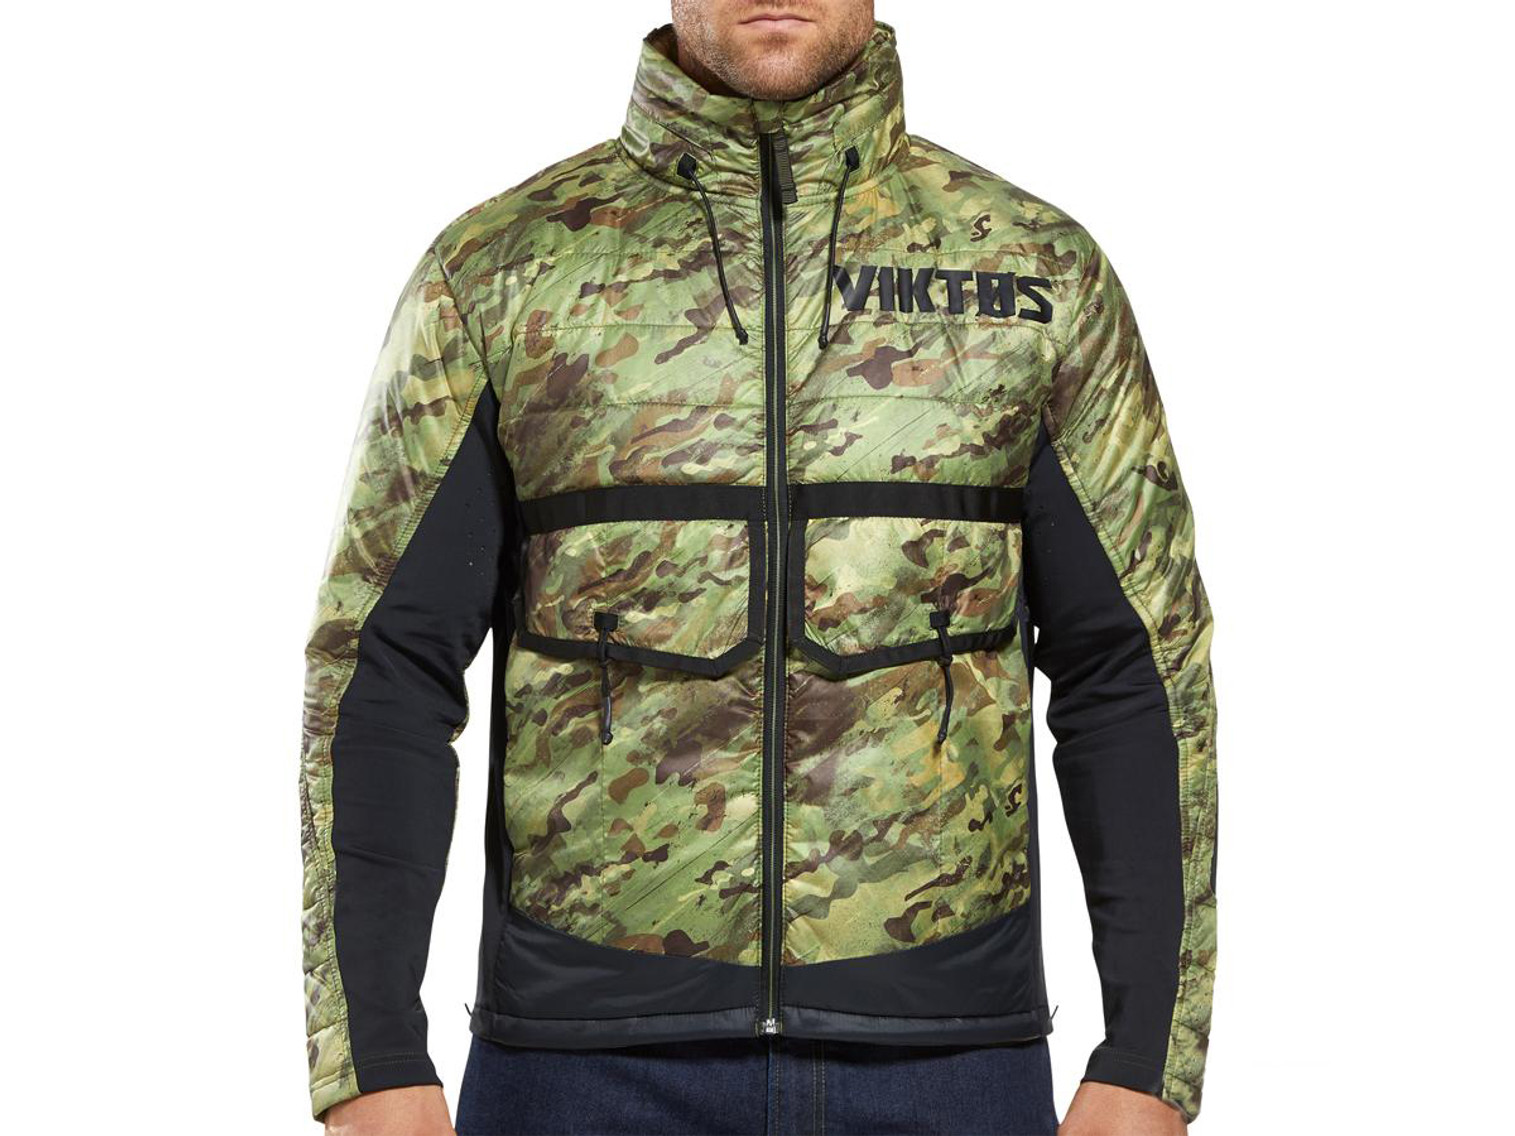 Viktos "ZERODARK" Weather Resistant Insulated Jacket (Color: Spartan / Medium)